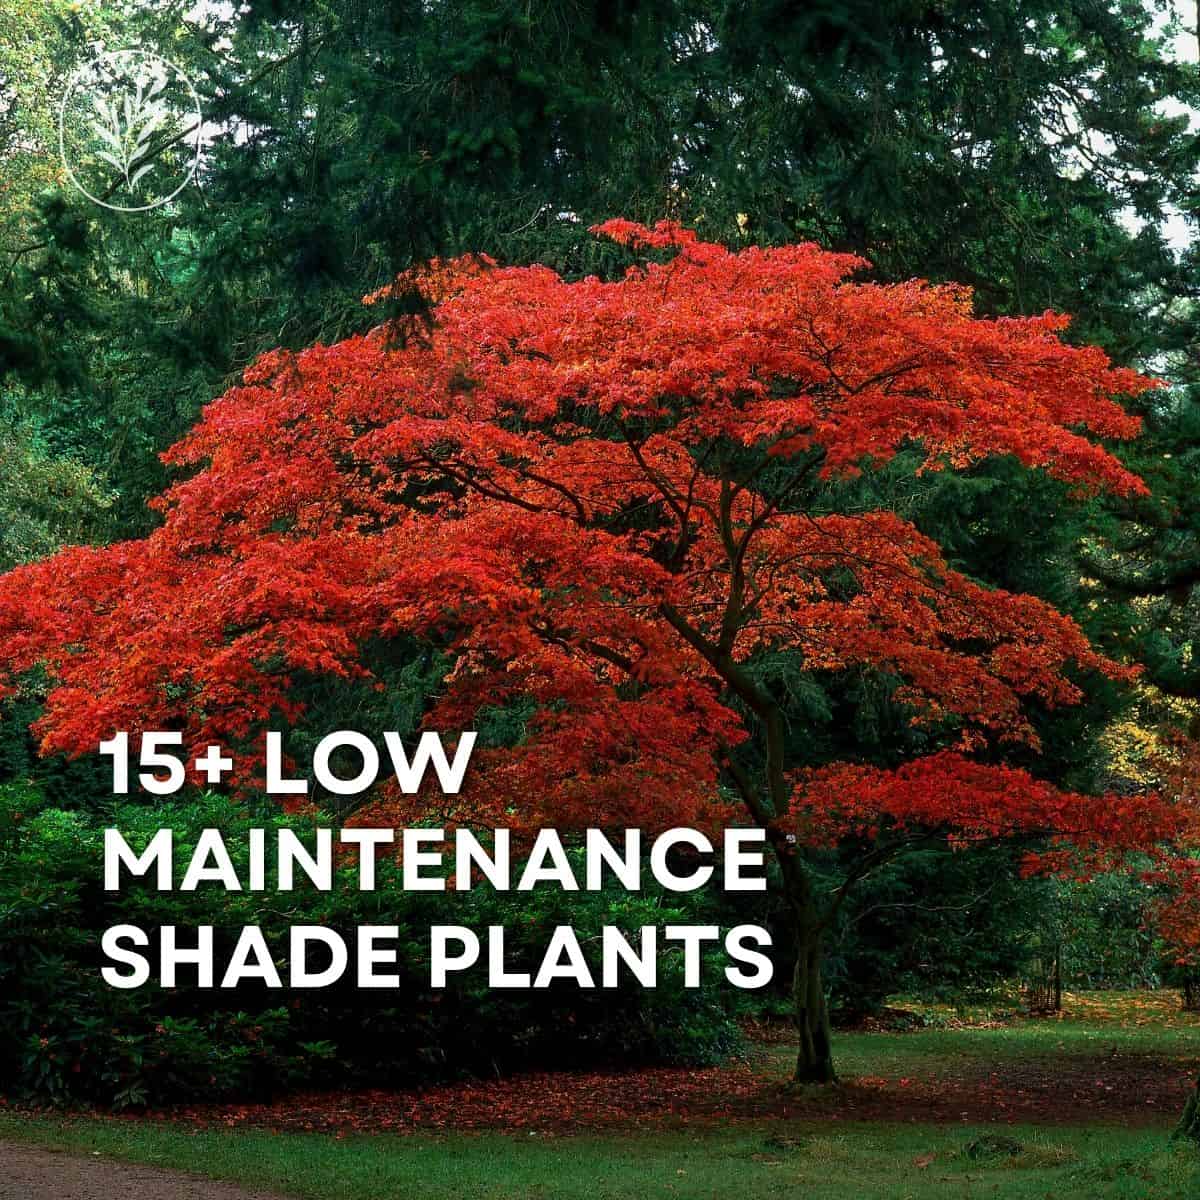 15 low maintenance shade plants - instagram via @home4theharvest